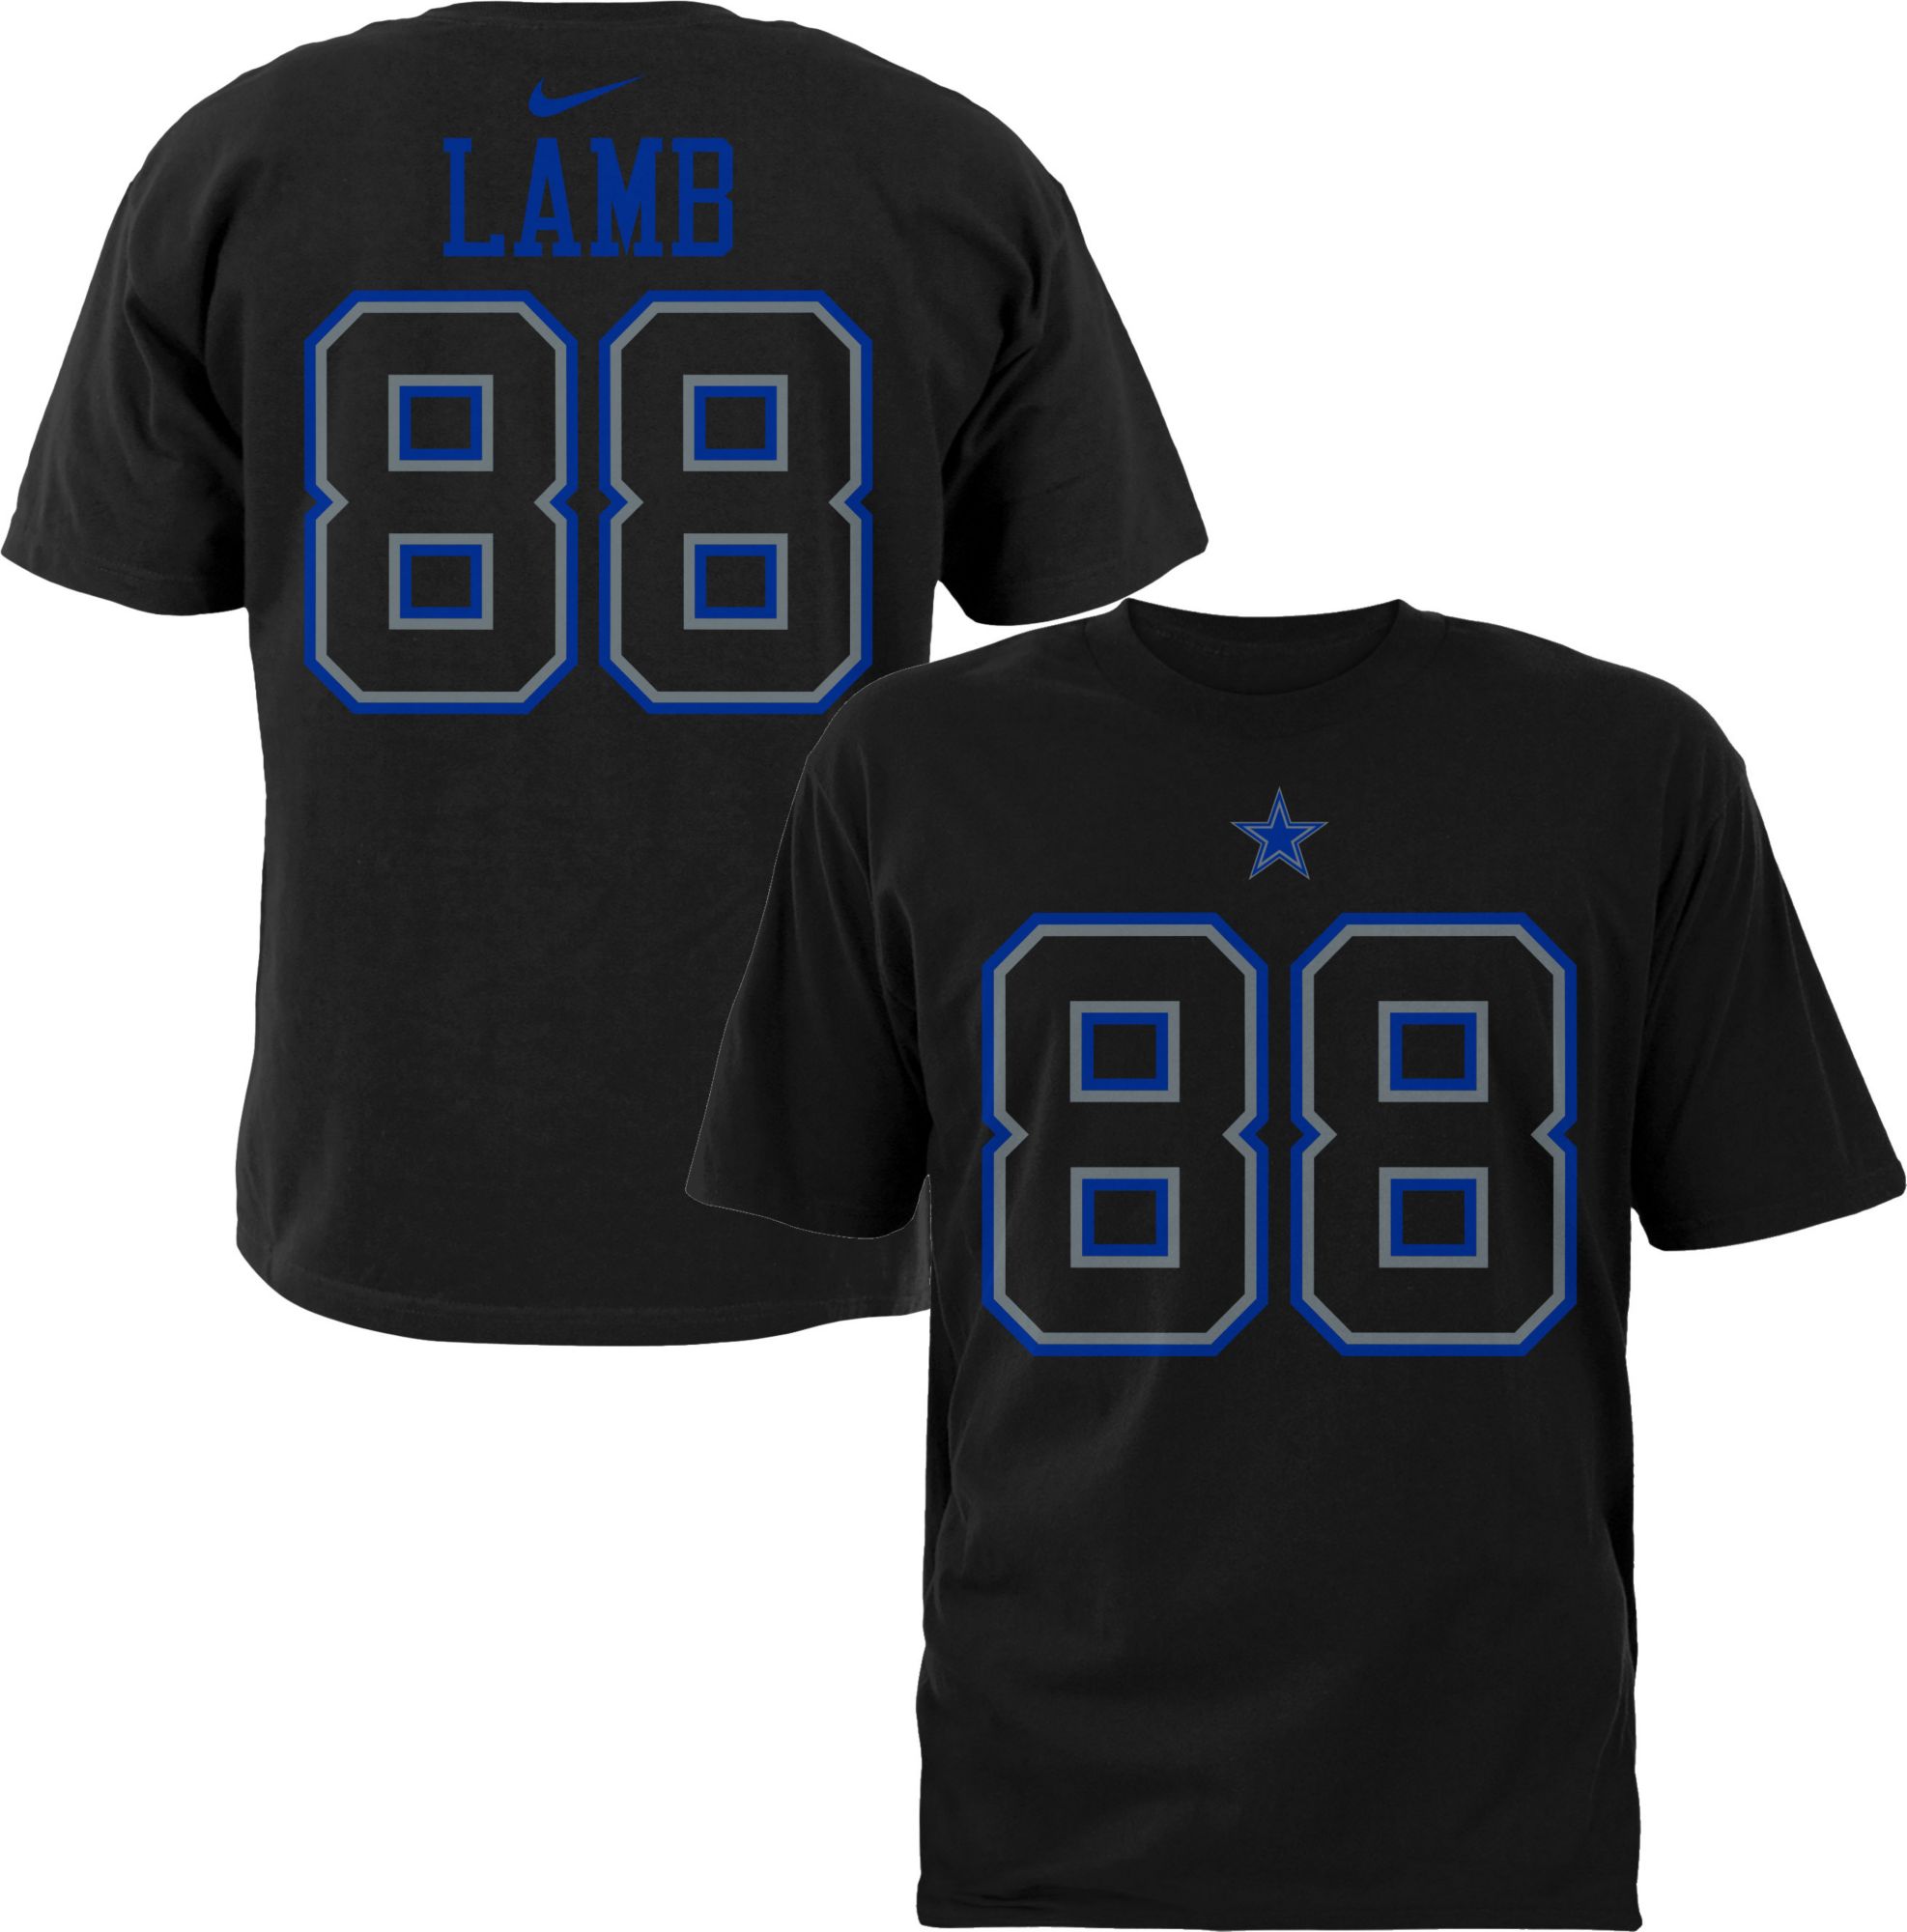 Nike Men's Dallas Cowboys CeeDee Lamb #88 Navy Game Jersey